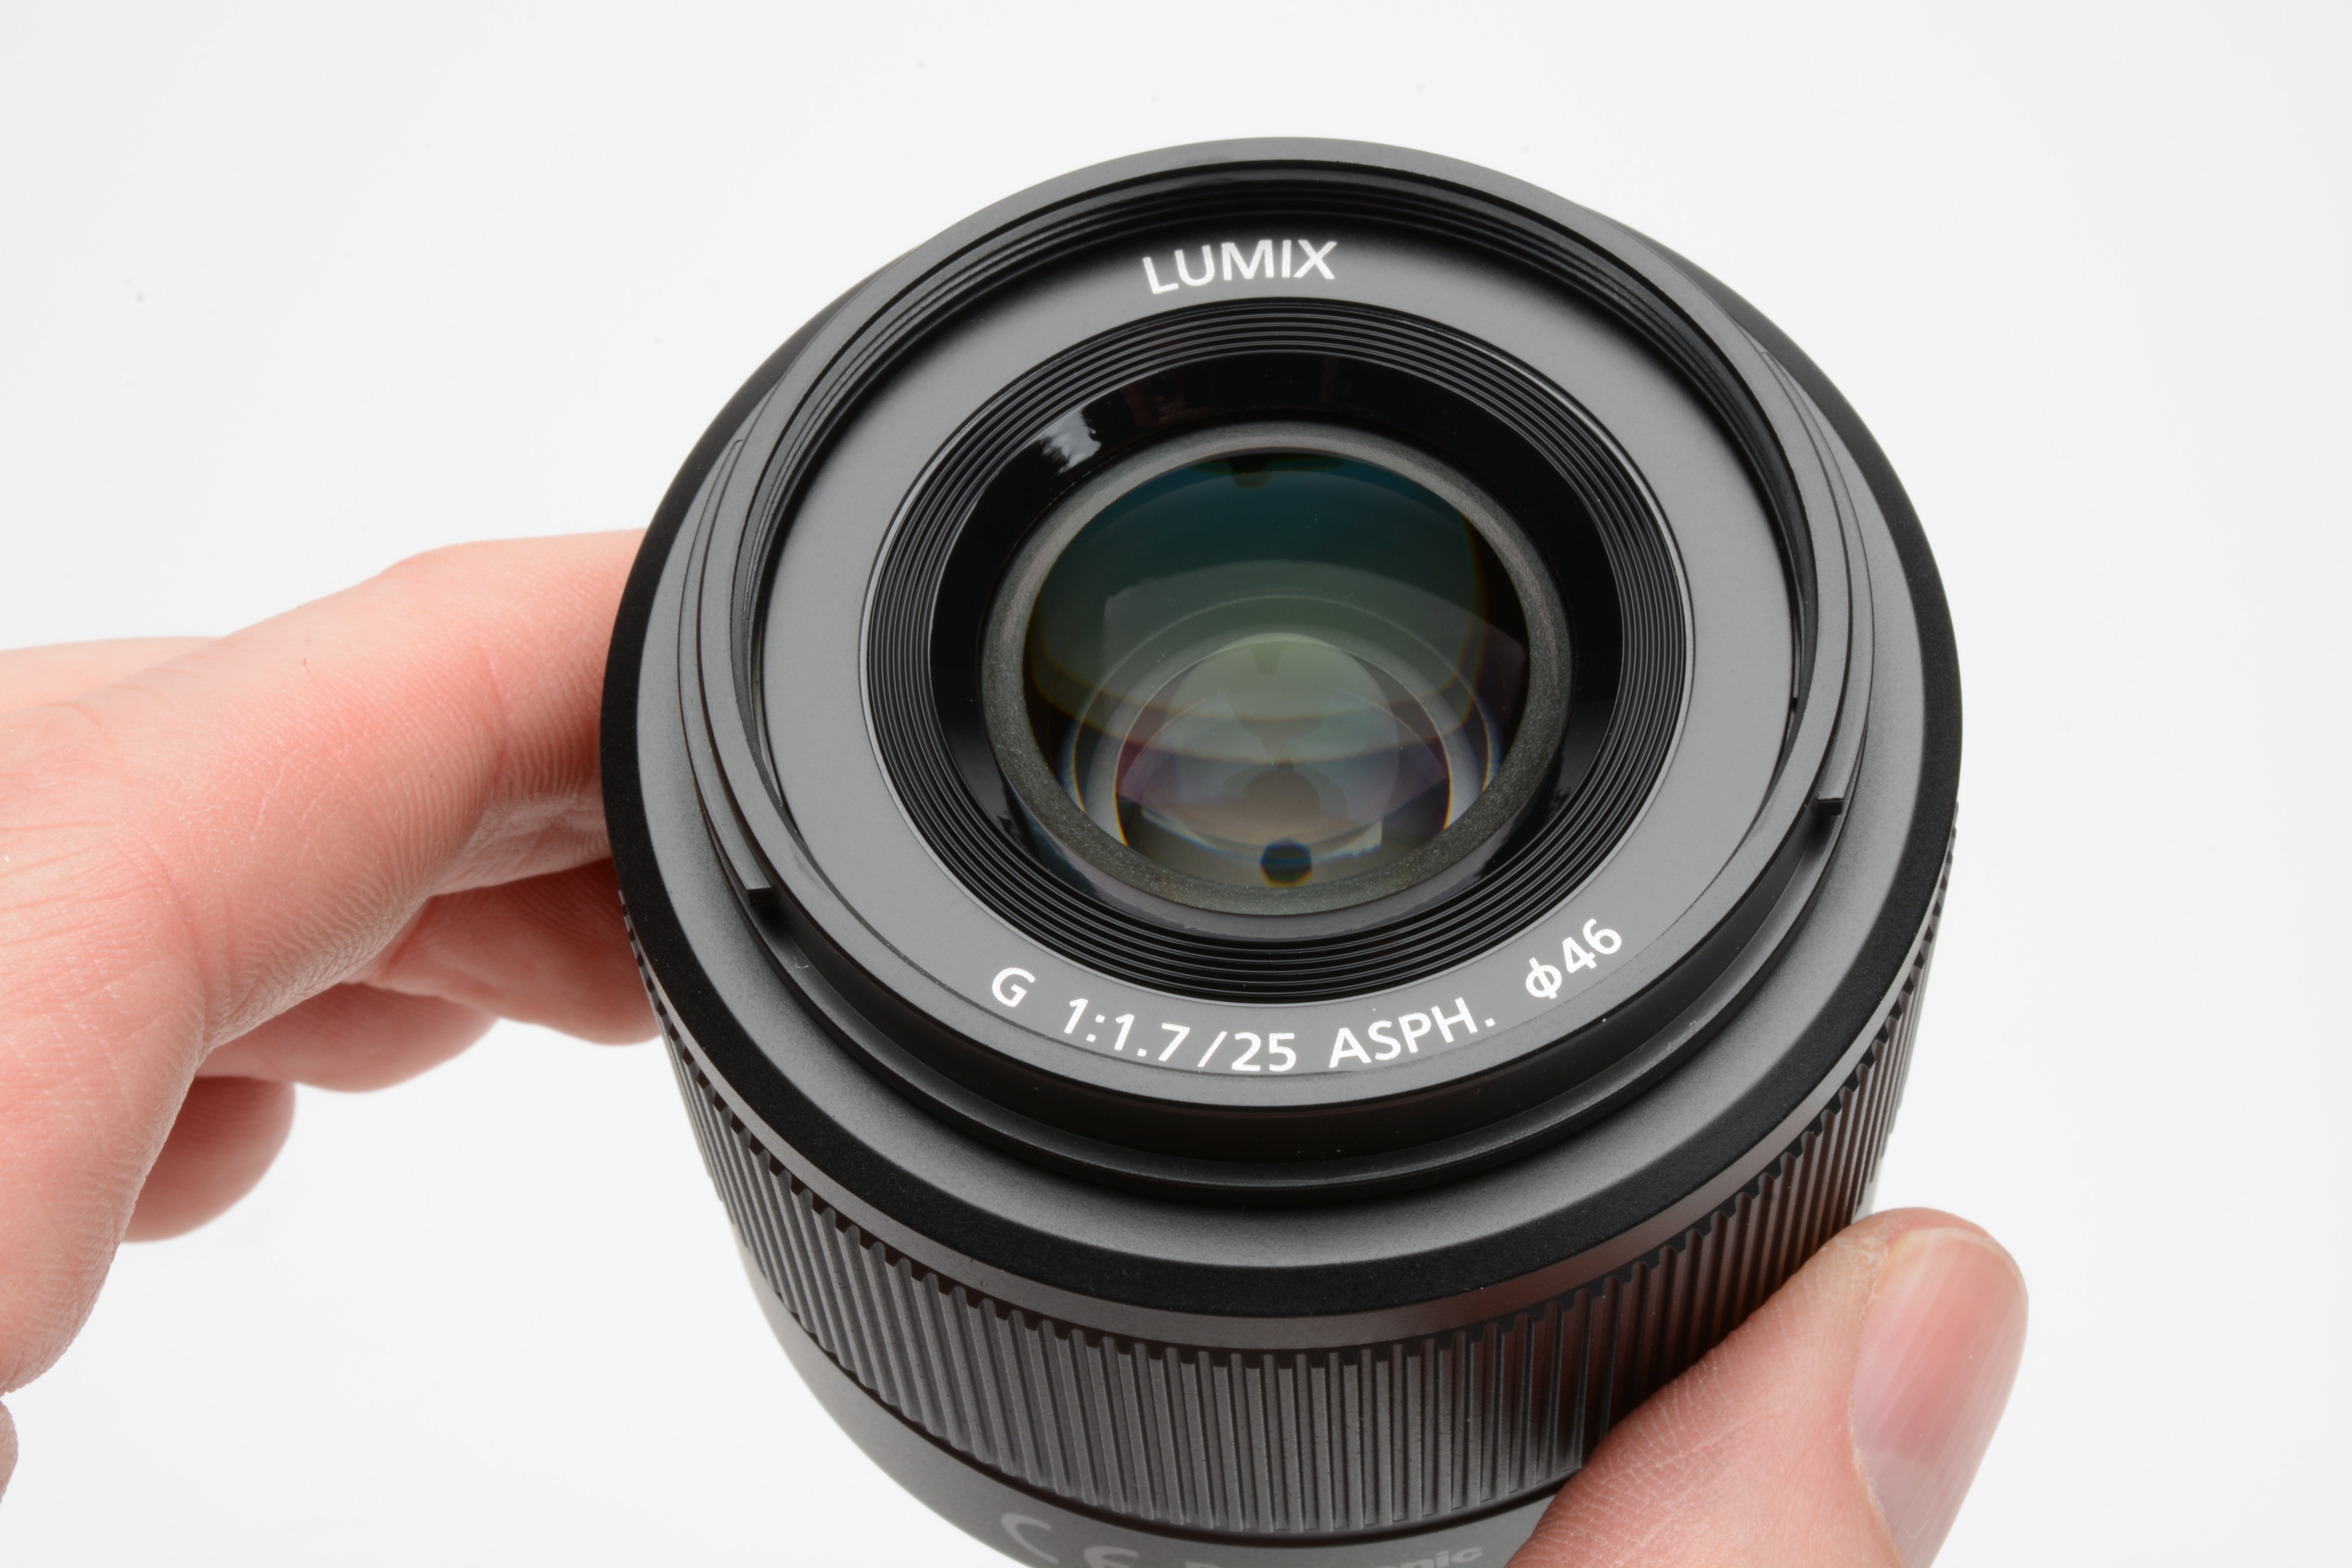 Panasonic Lumix G 25mm F1.7 Aspherical lens, H-H025, caps+hood